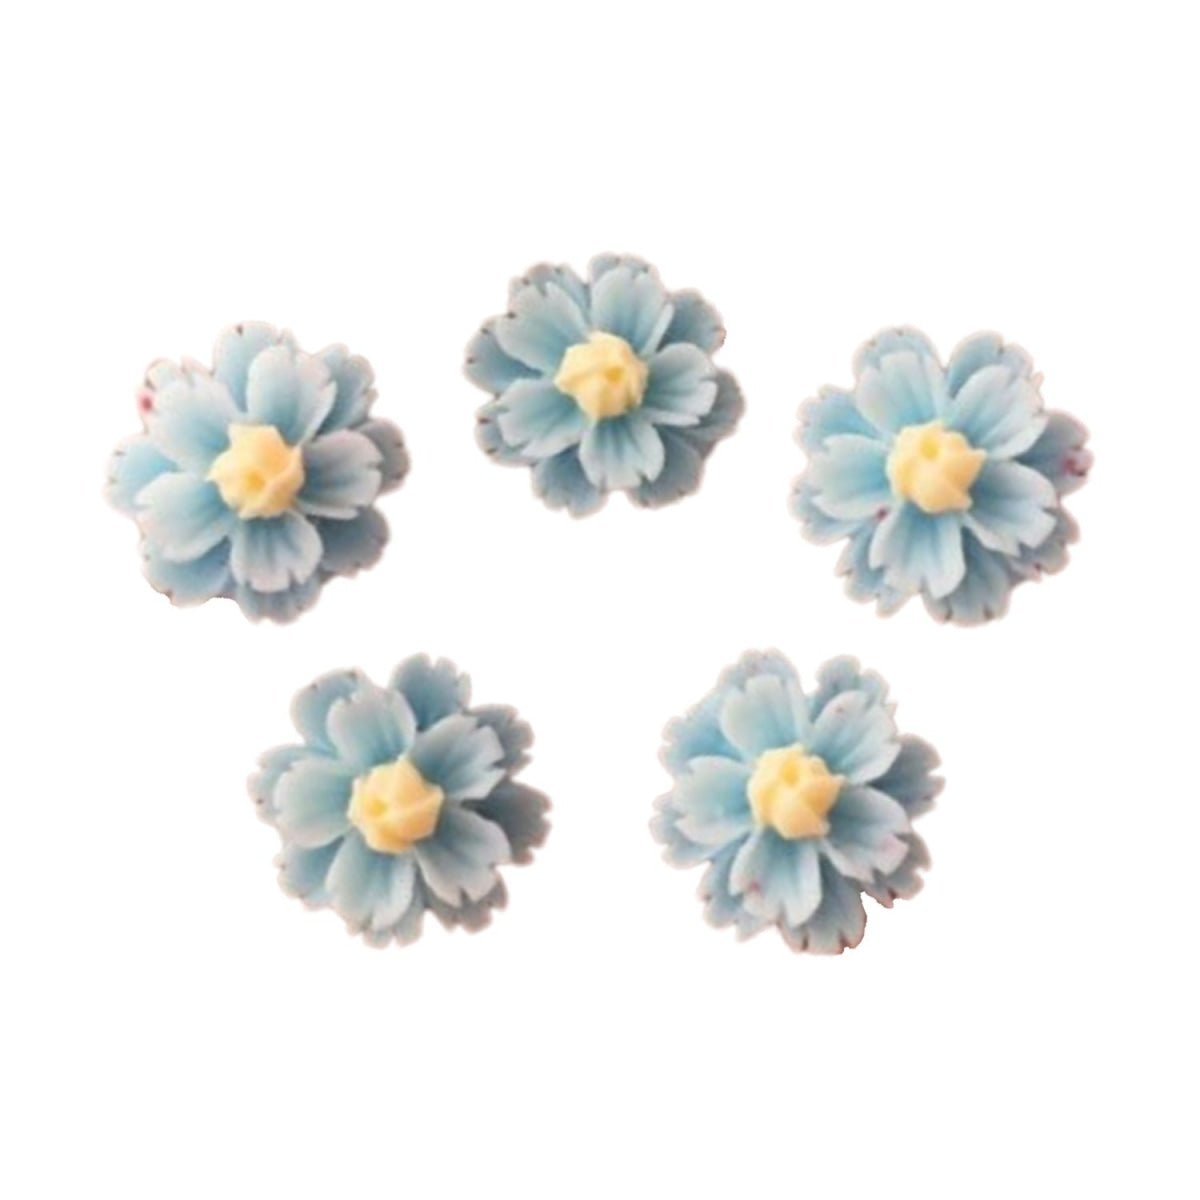 40pcs 3D Flower Flatback Embellishment 13mm Resin Shape Decorations DIY Crafts - Light Blue - - Asia Sell